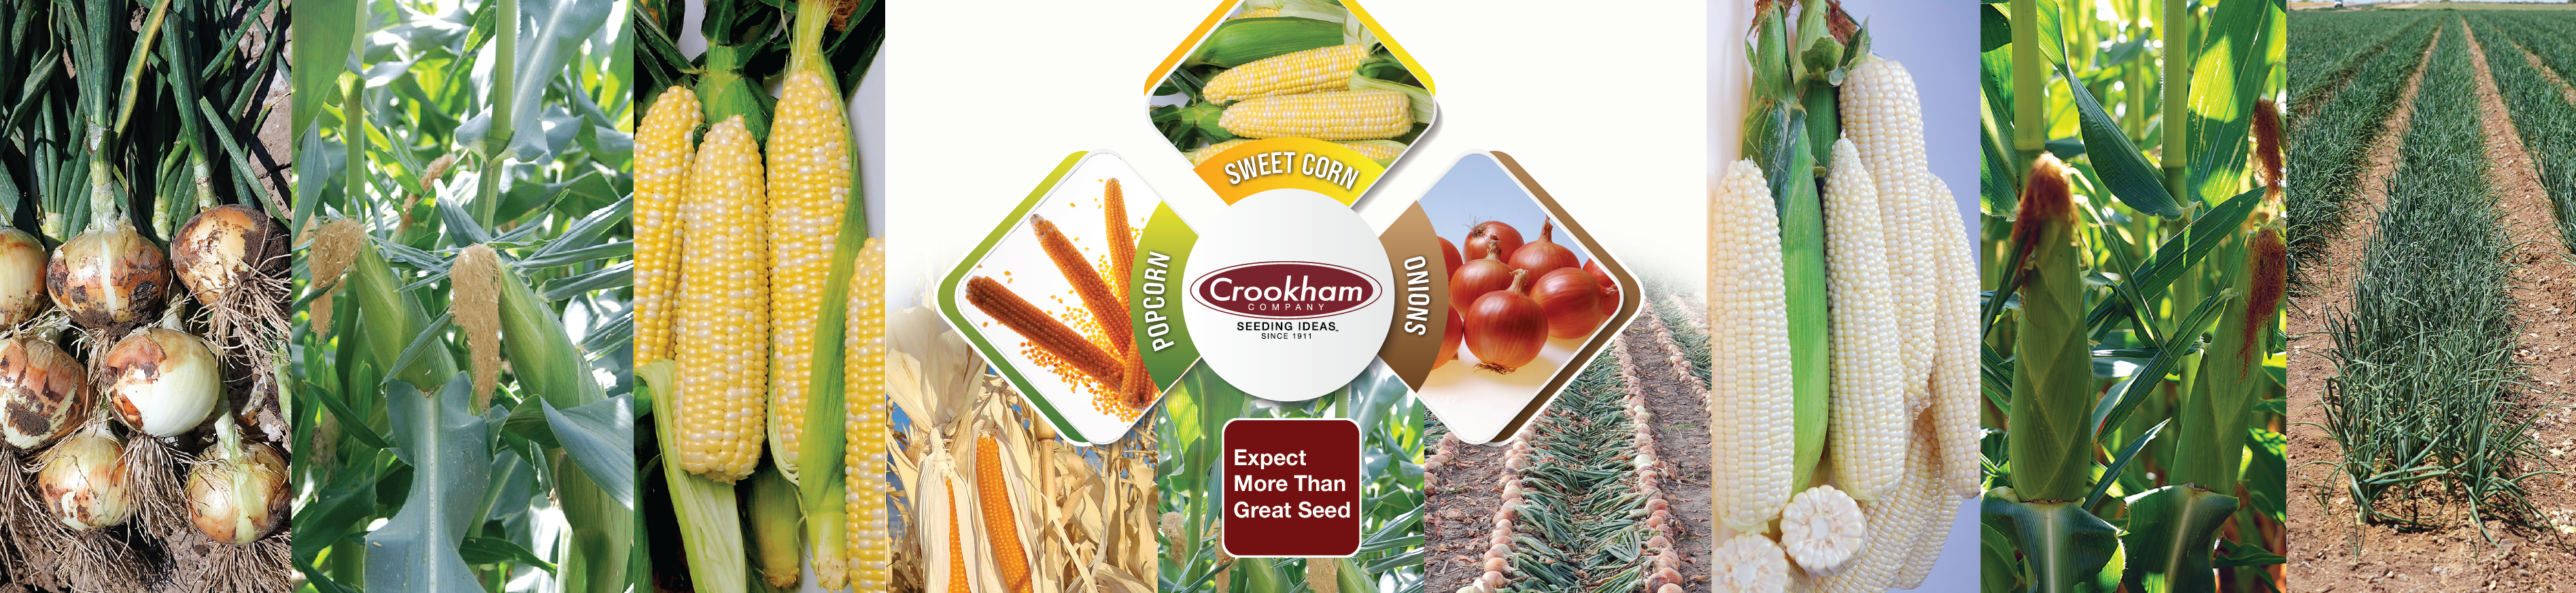 Crookham Company Southeast Crop Handbook Sweet Corn Onions